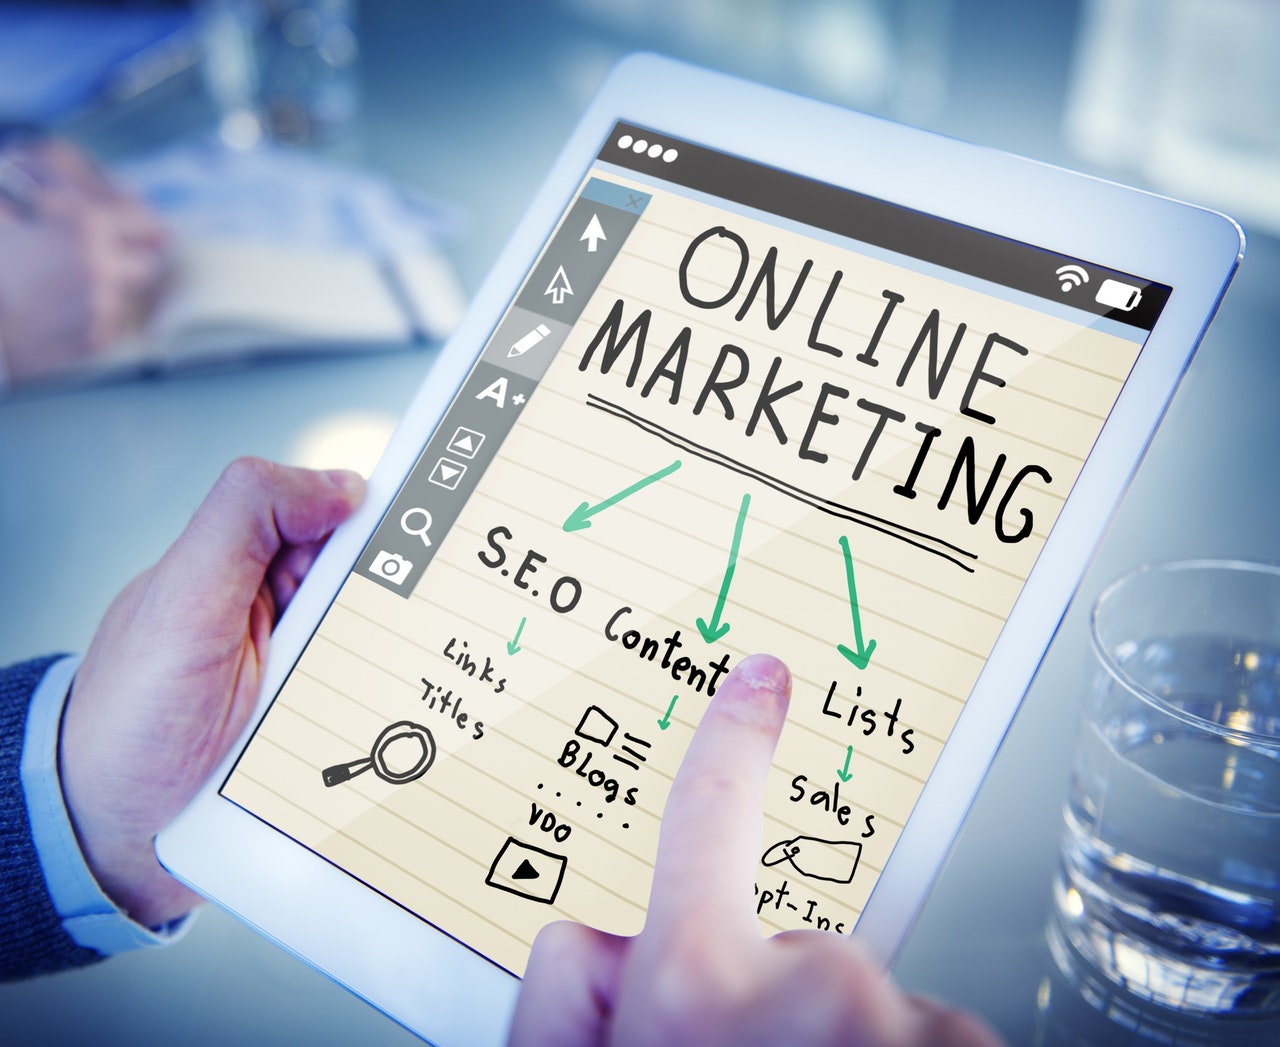 Digital Marketing, Search Engine Optimization and Marketing